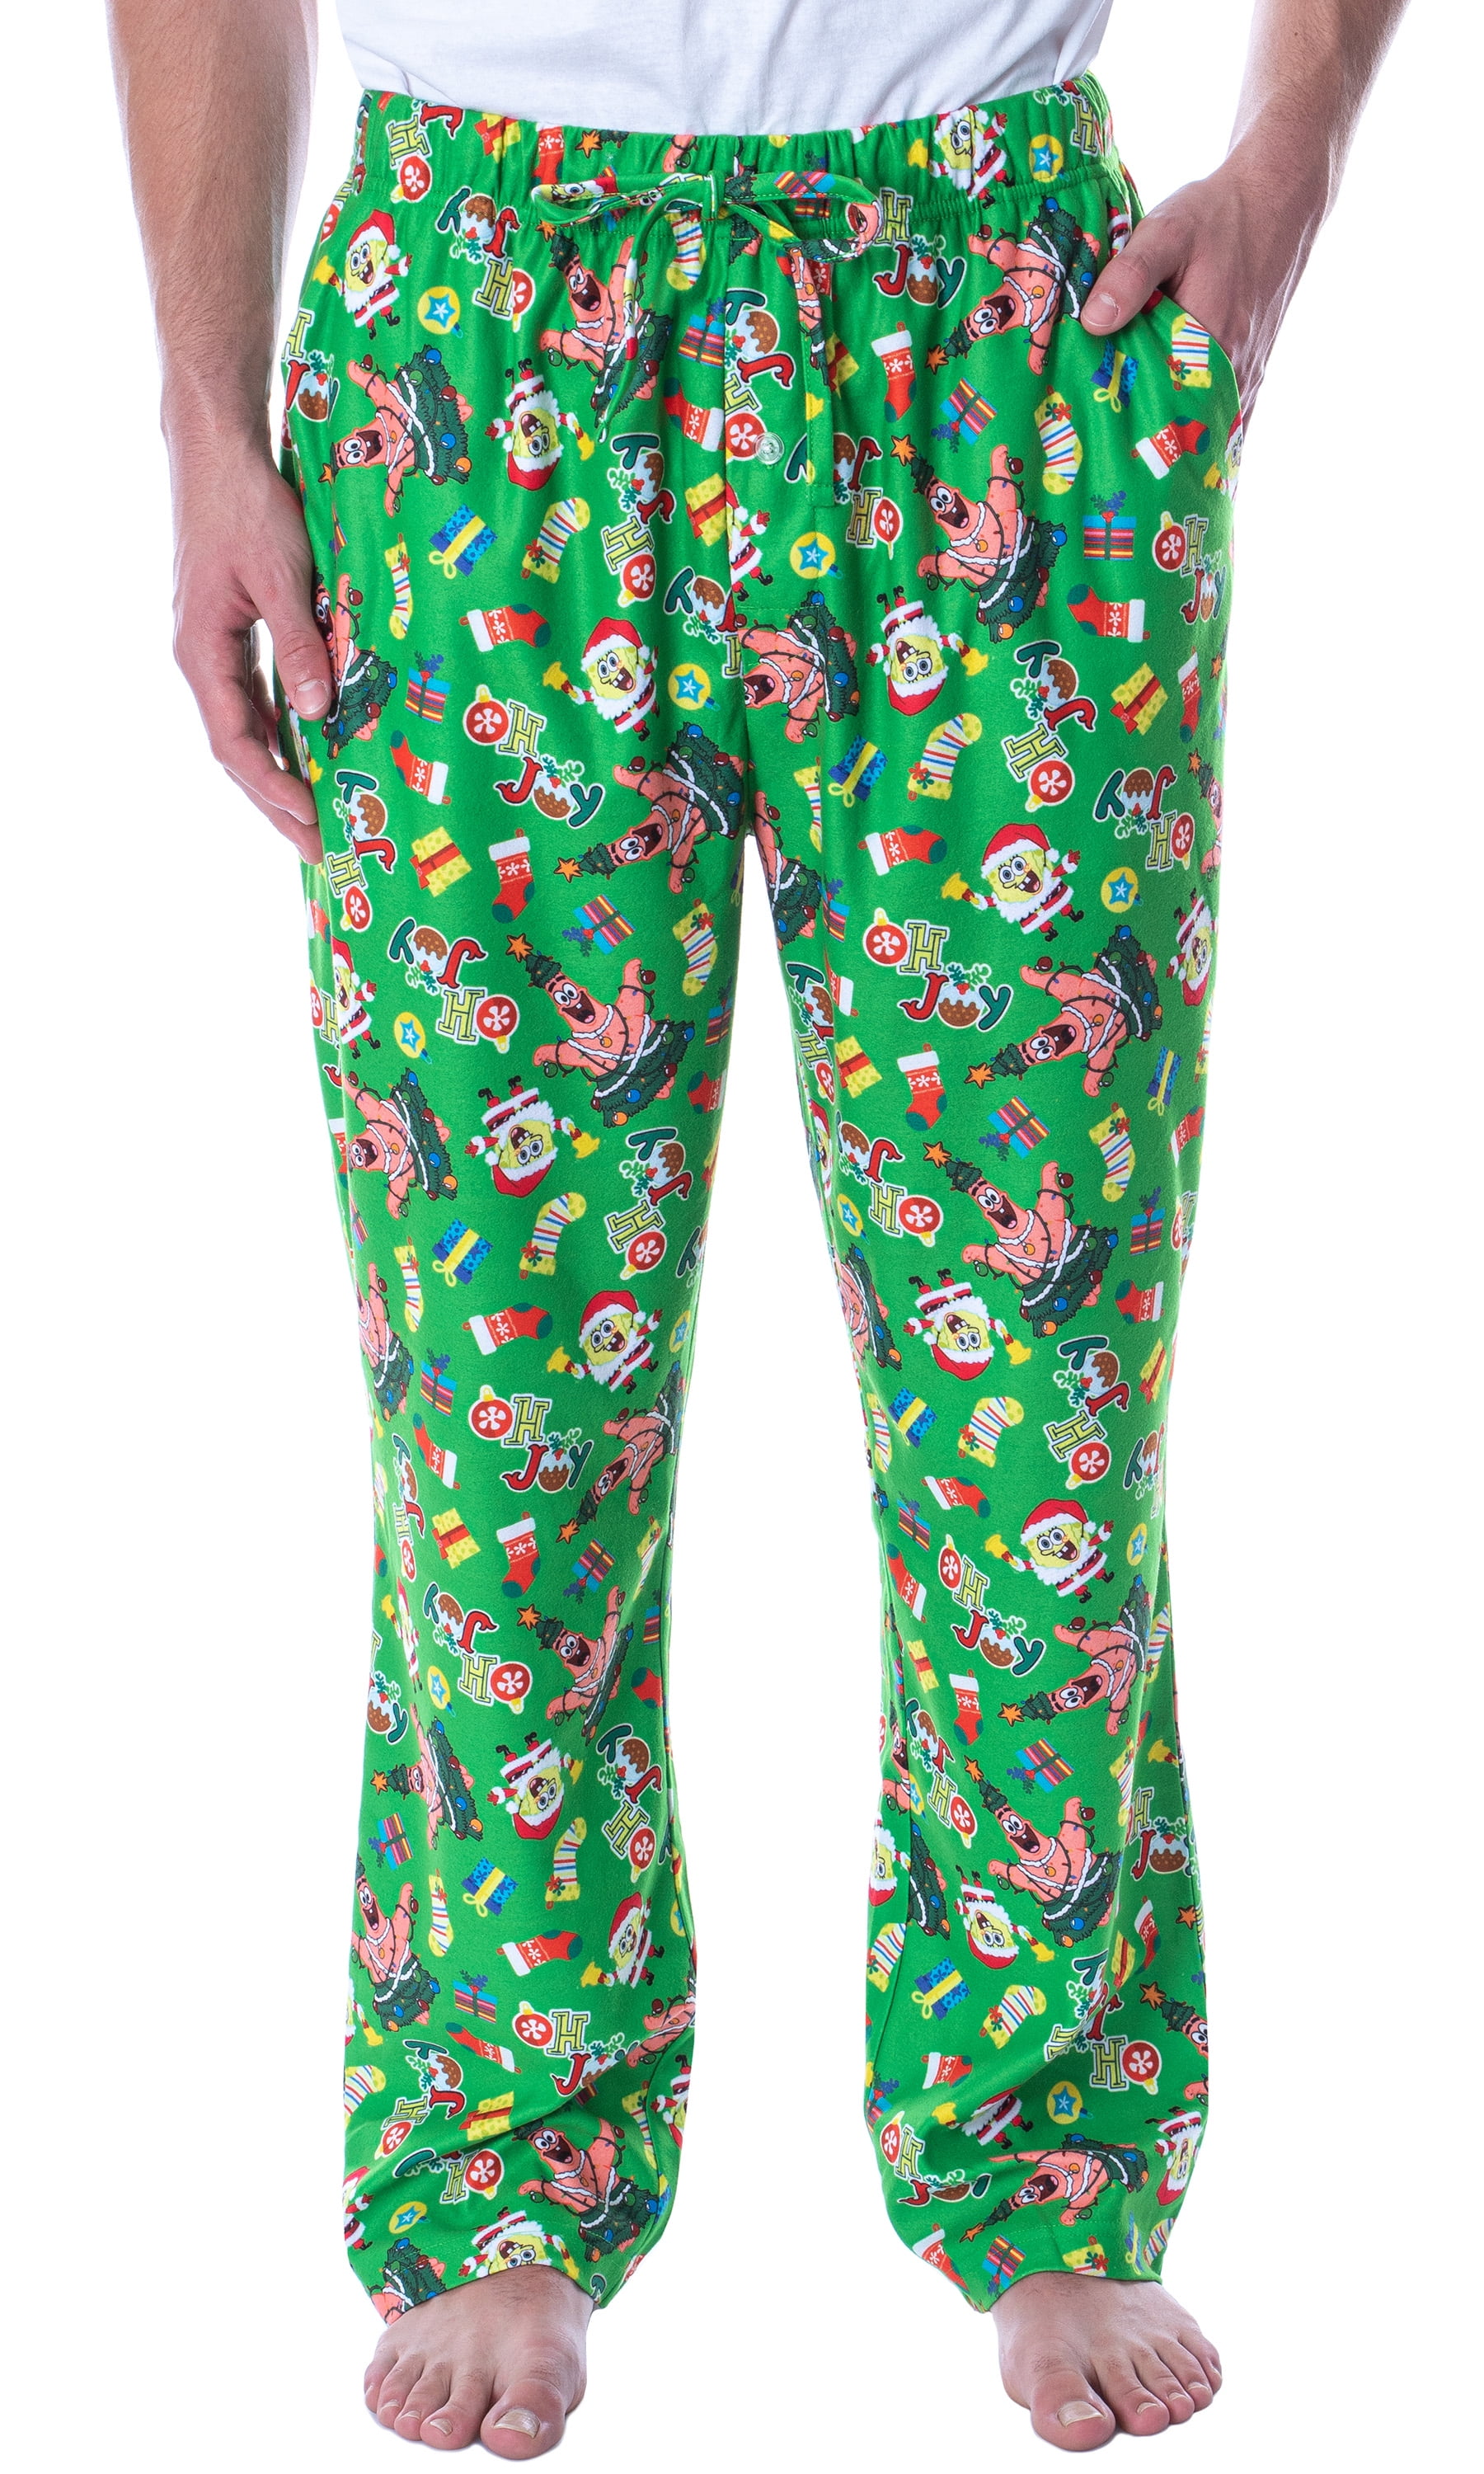 Nickelodeon Toddler Boys' Teenage Mutant Ninja Turtles Jogger Pajama Set  (4T) Green